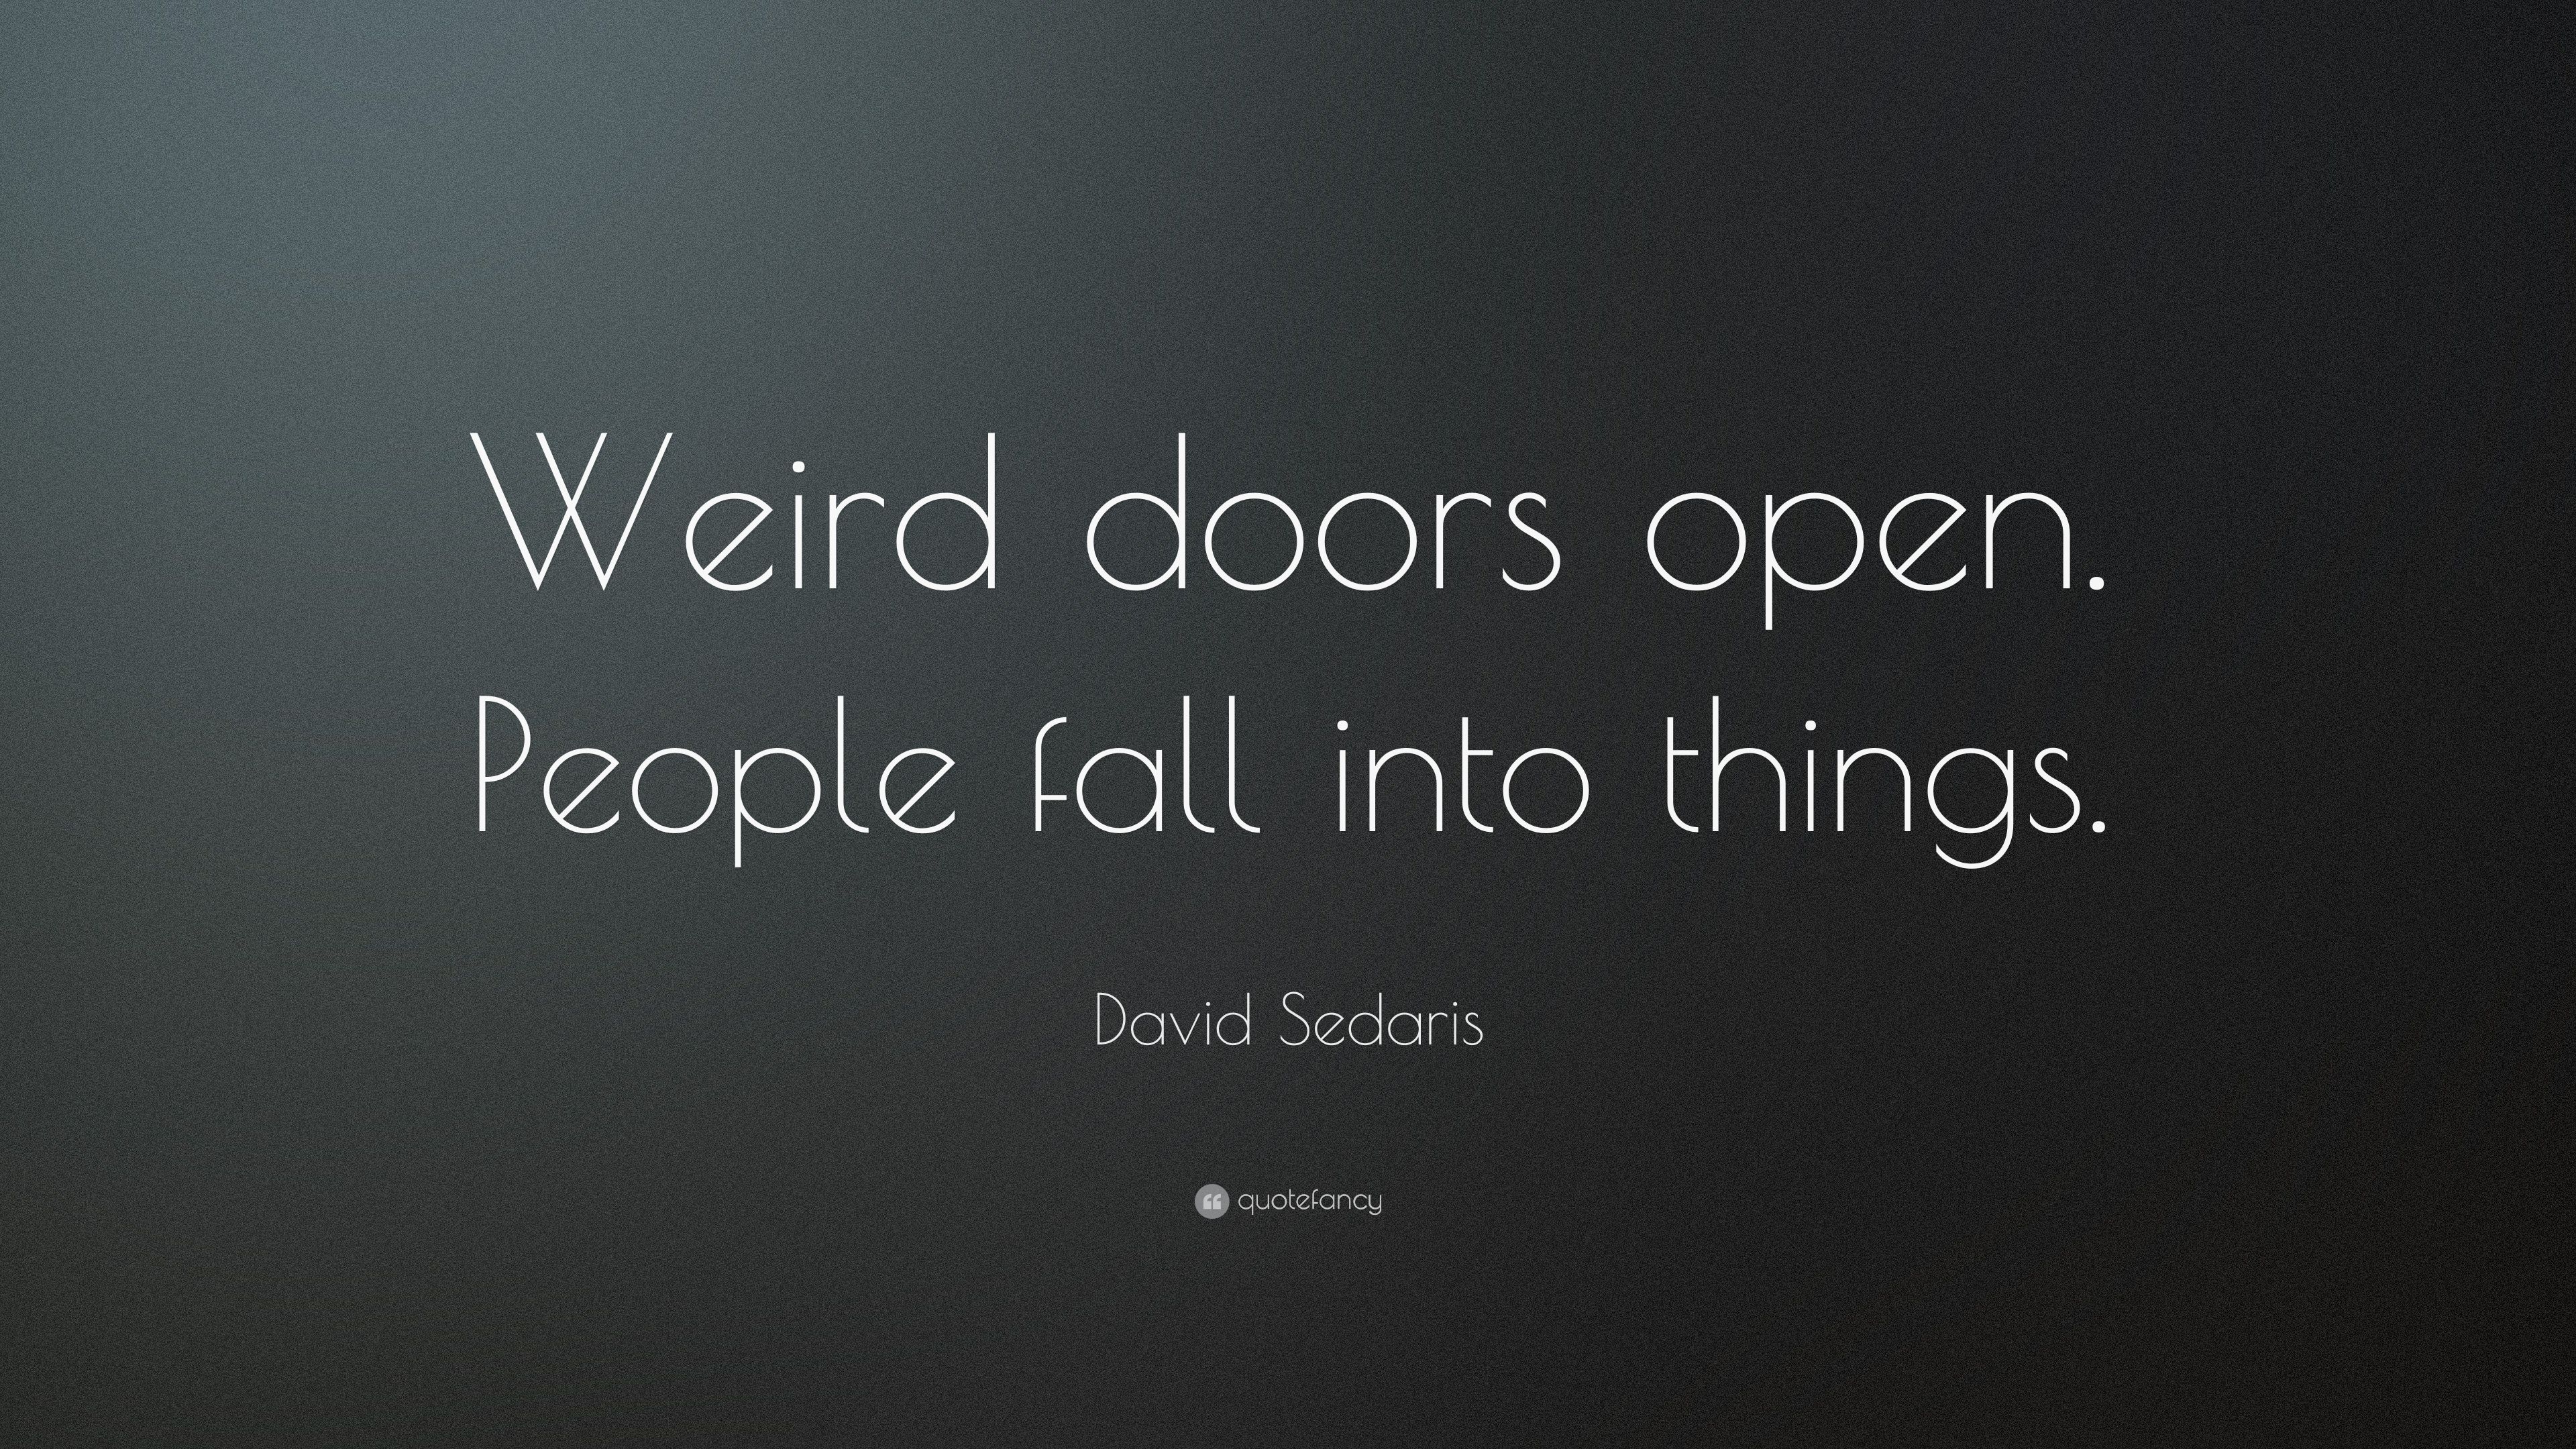 David Sedaris Quote: “Weird doors open. People fall into things